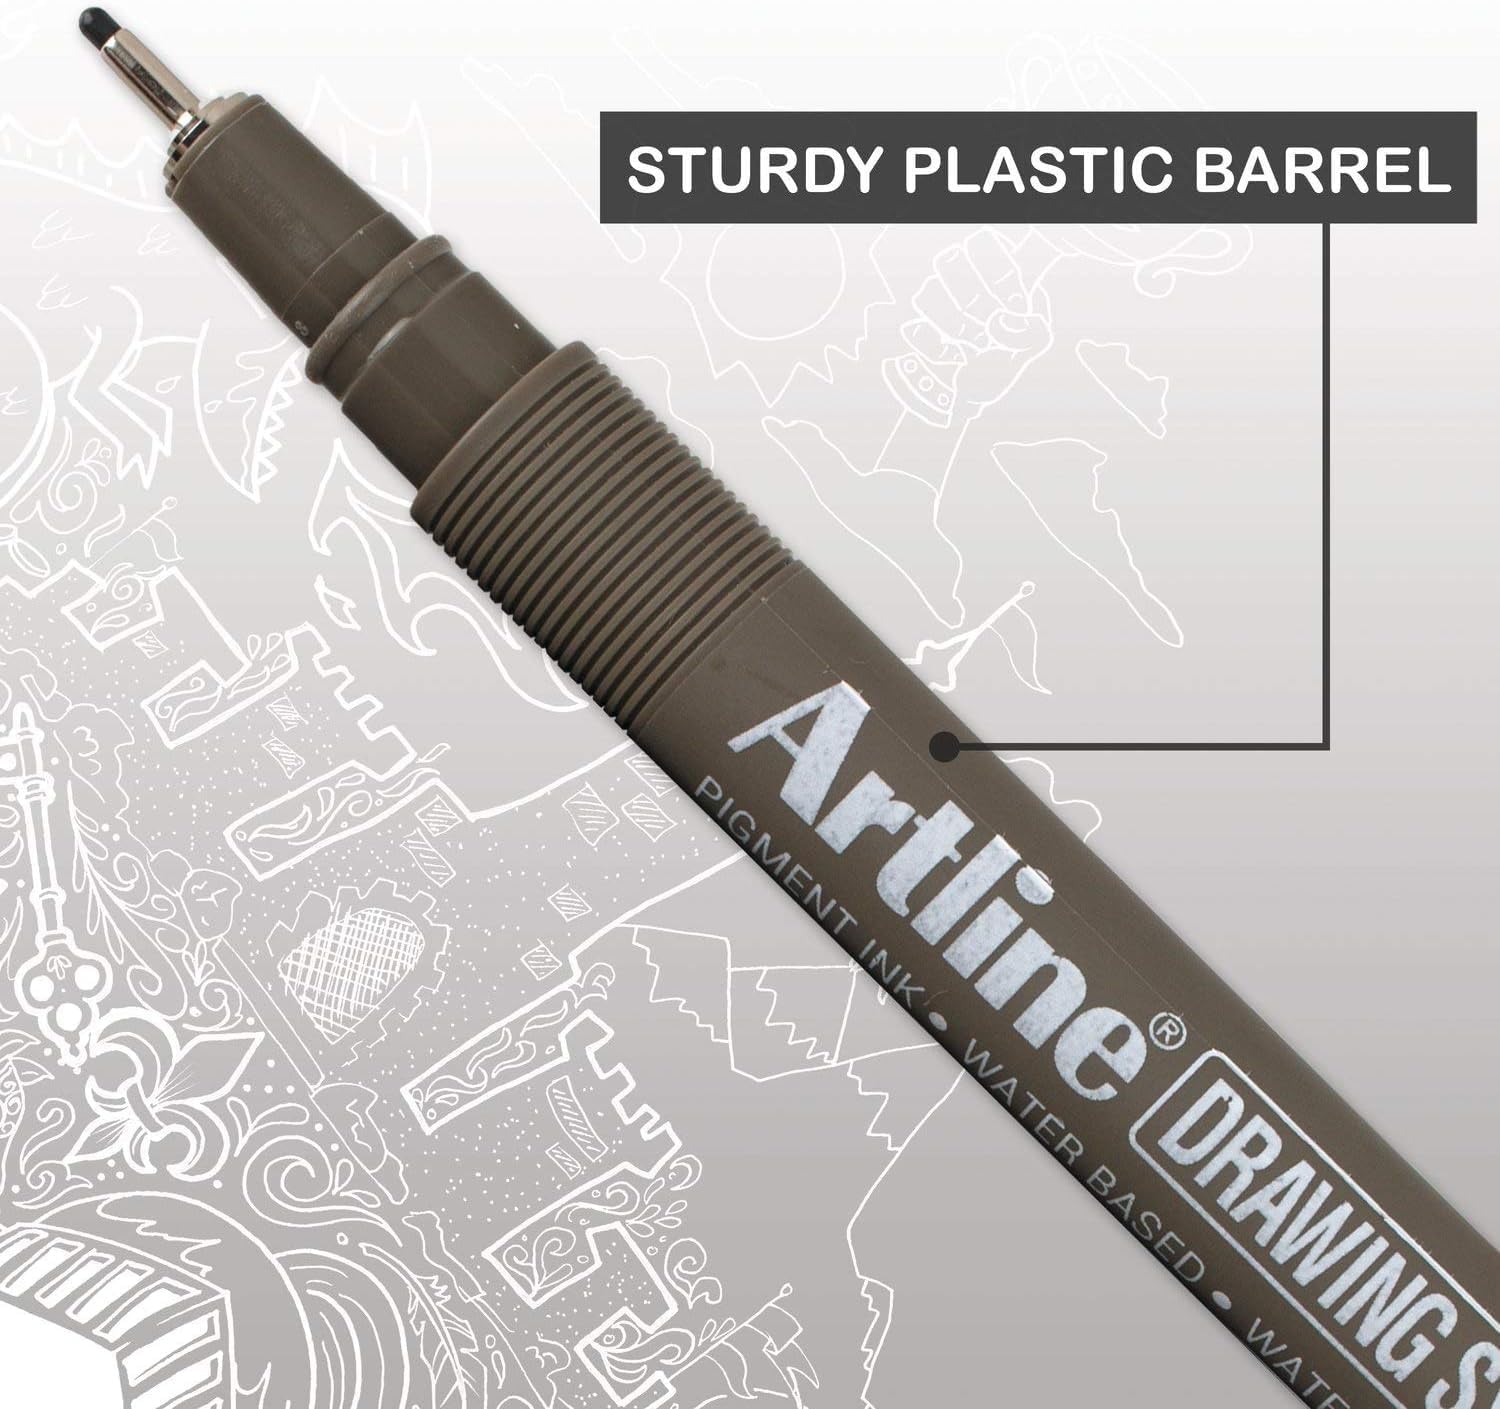 Artline Drawing System Pens, 0.2, 0.4, 0.6, 0.8 mm ,4 Pack